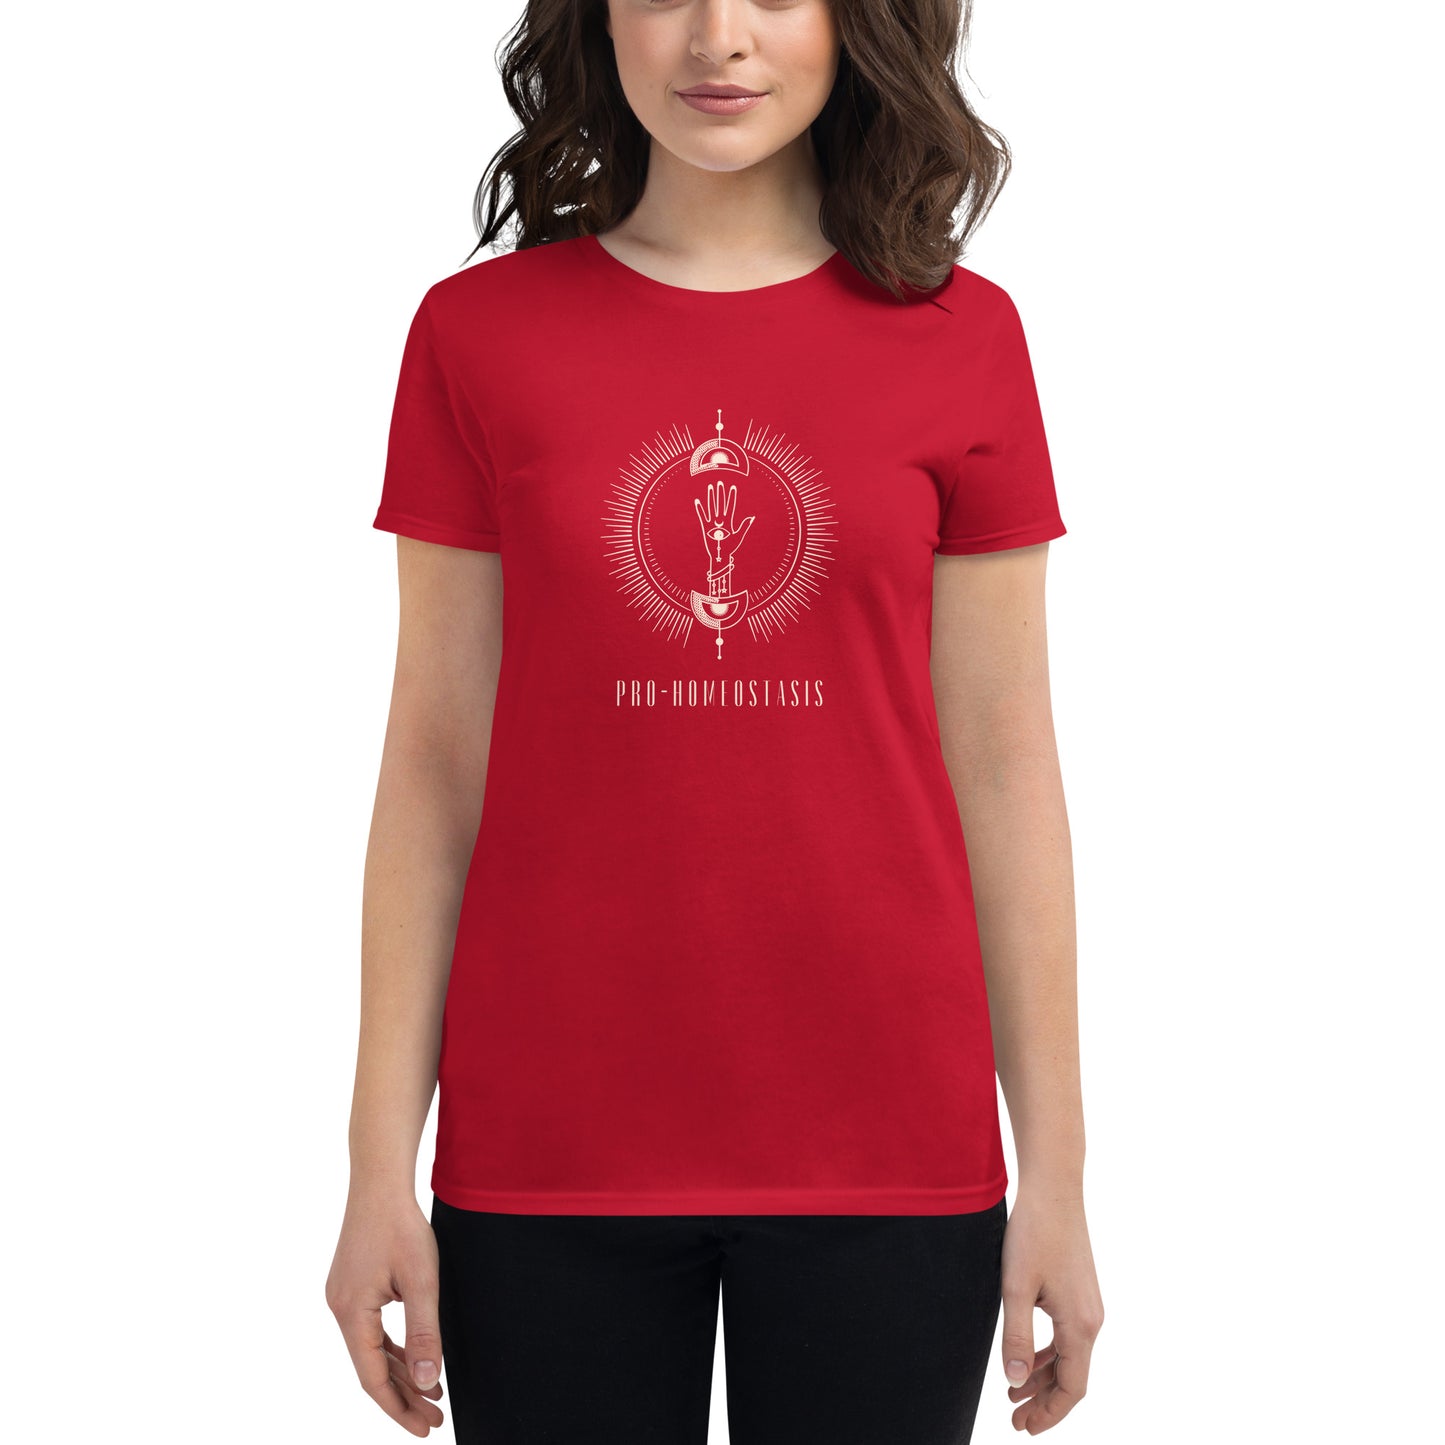 Pro-Homeostasis - Women's T-shirt